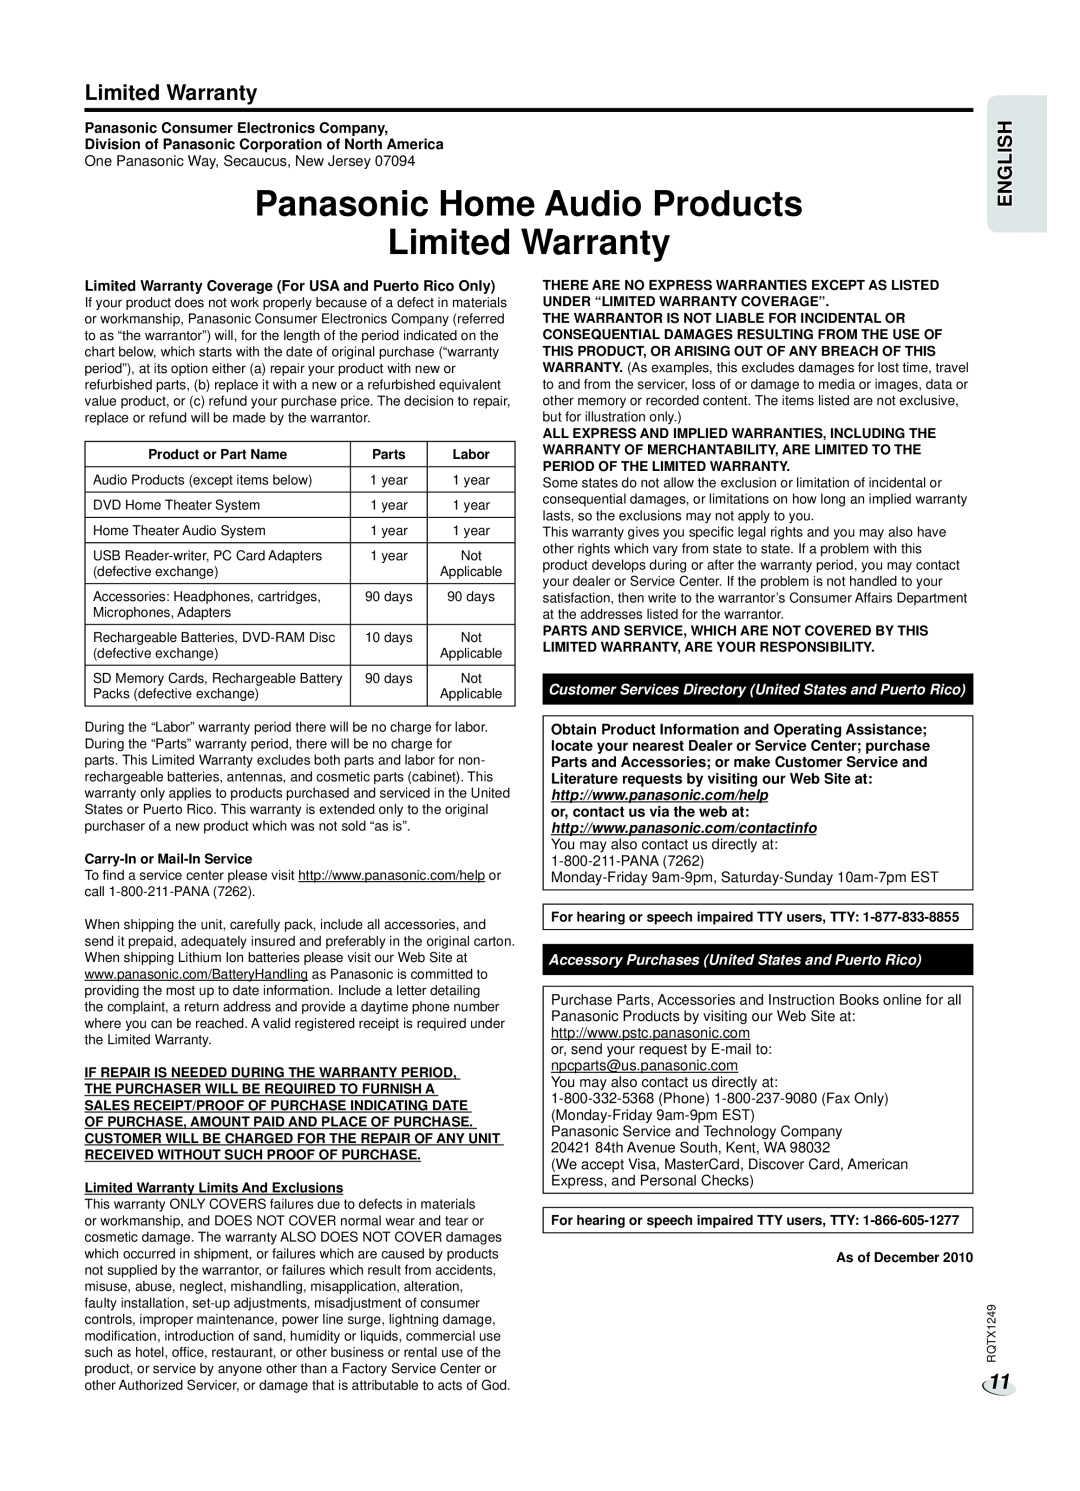 Panasonic SC-HC25 Panasonic Home Audio Products Limited Warranty, English, Panasonic Consumer Electronics Company 